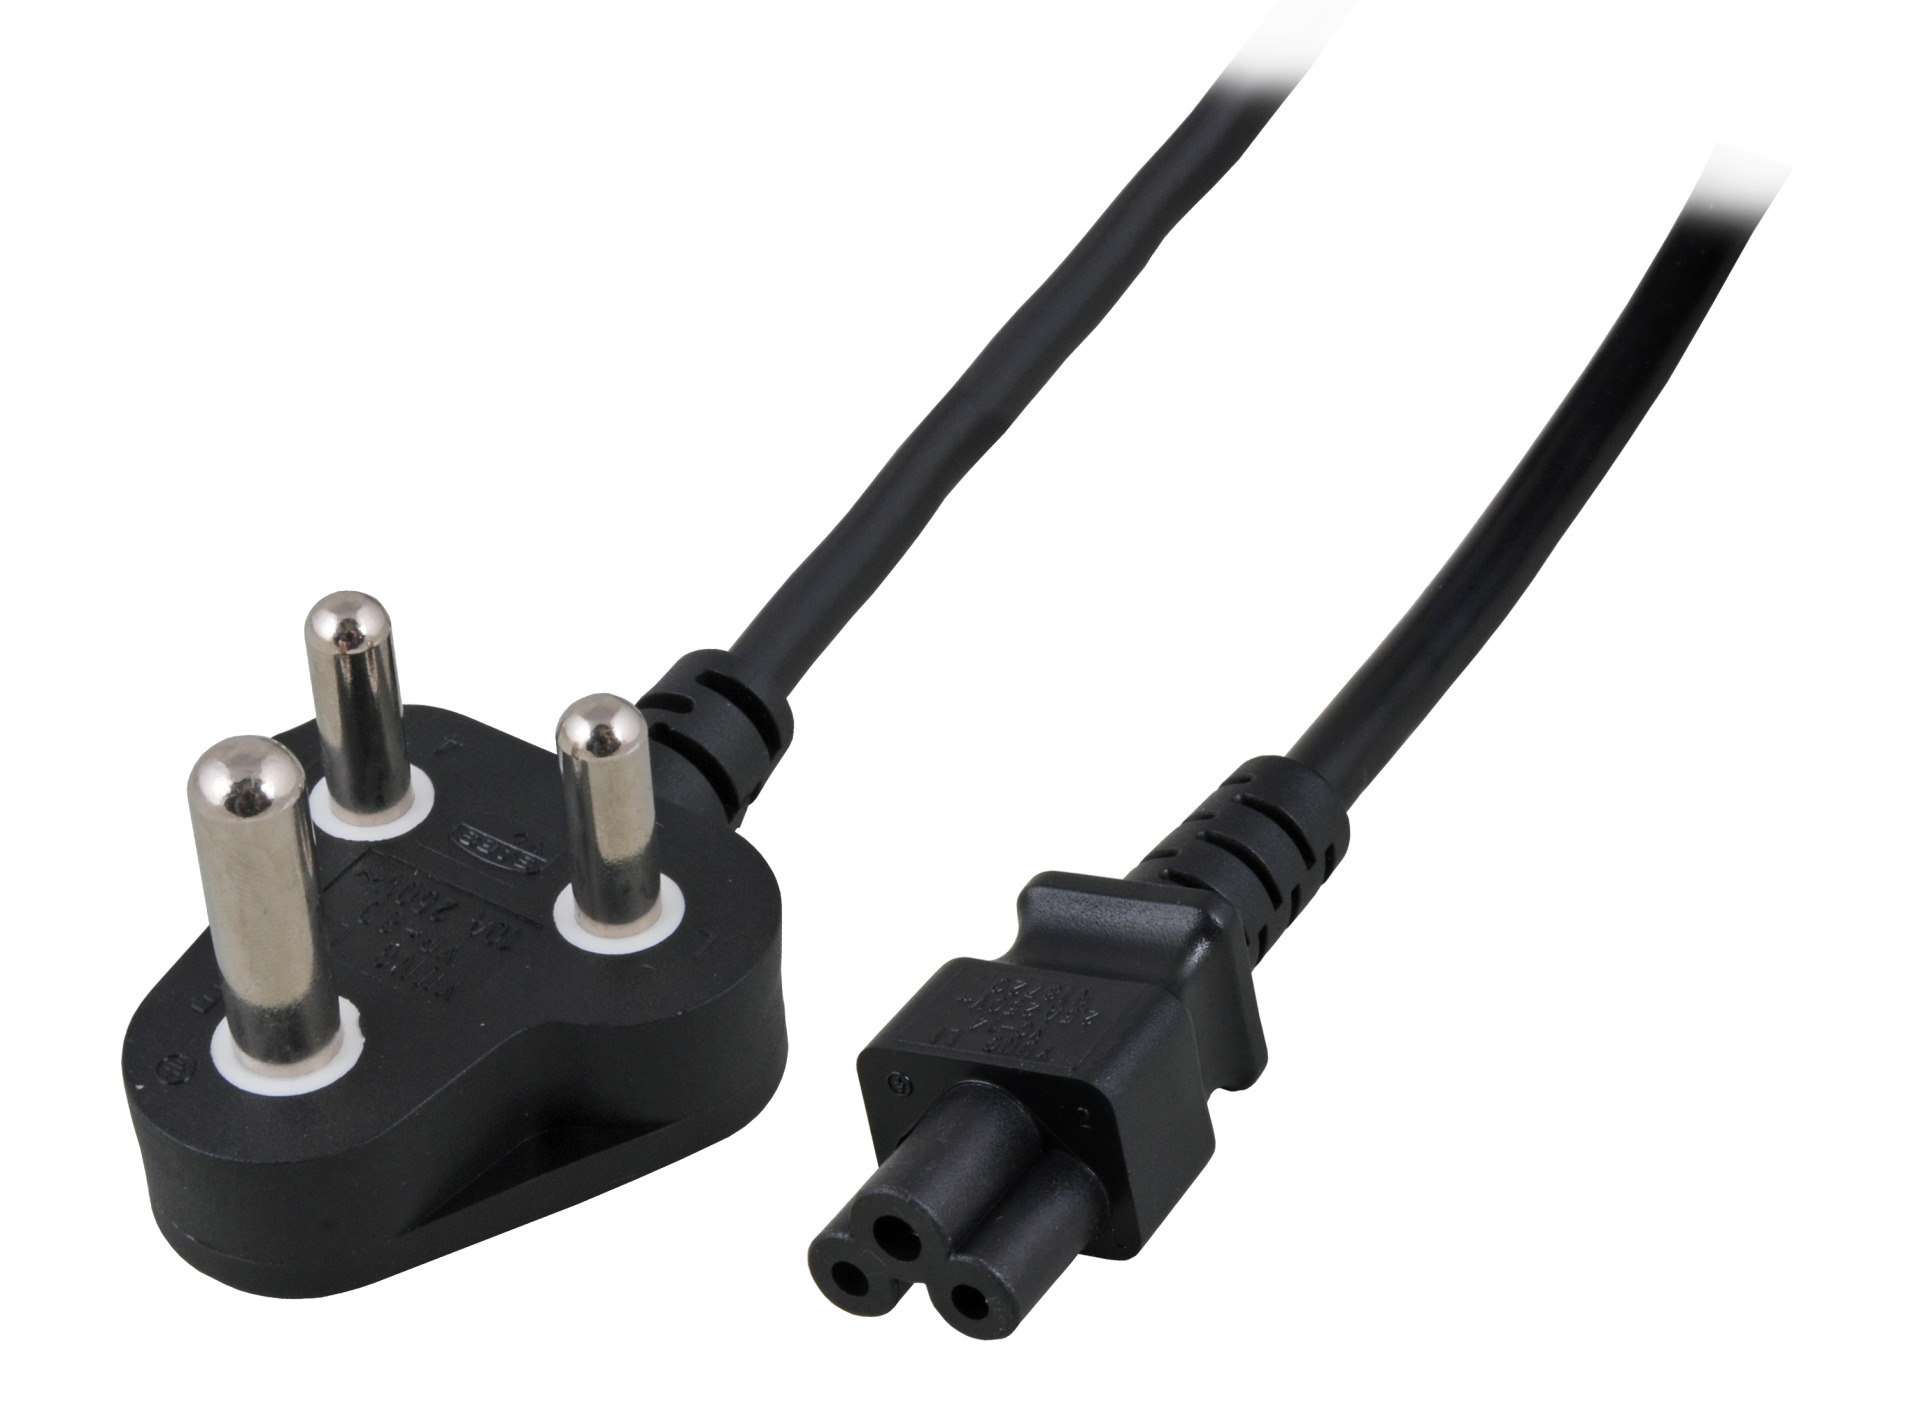 Power Cable South Afr. - C5 180°, Black, 1.8 m, 3 x 0.75 mm²